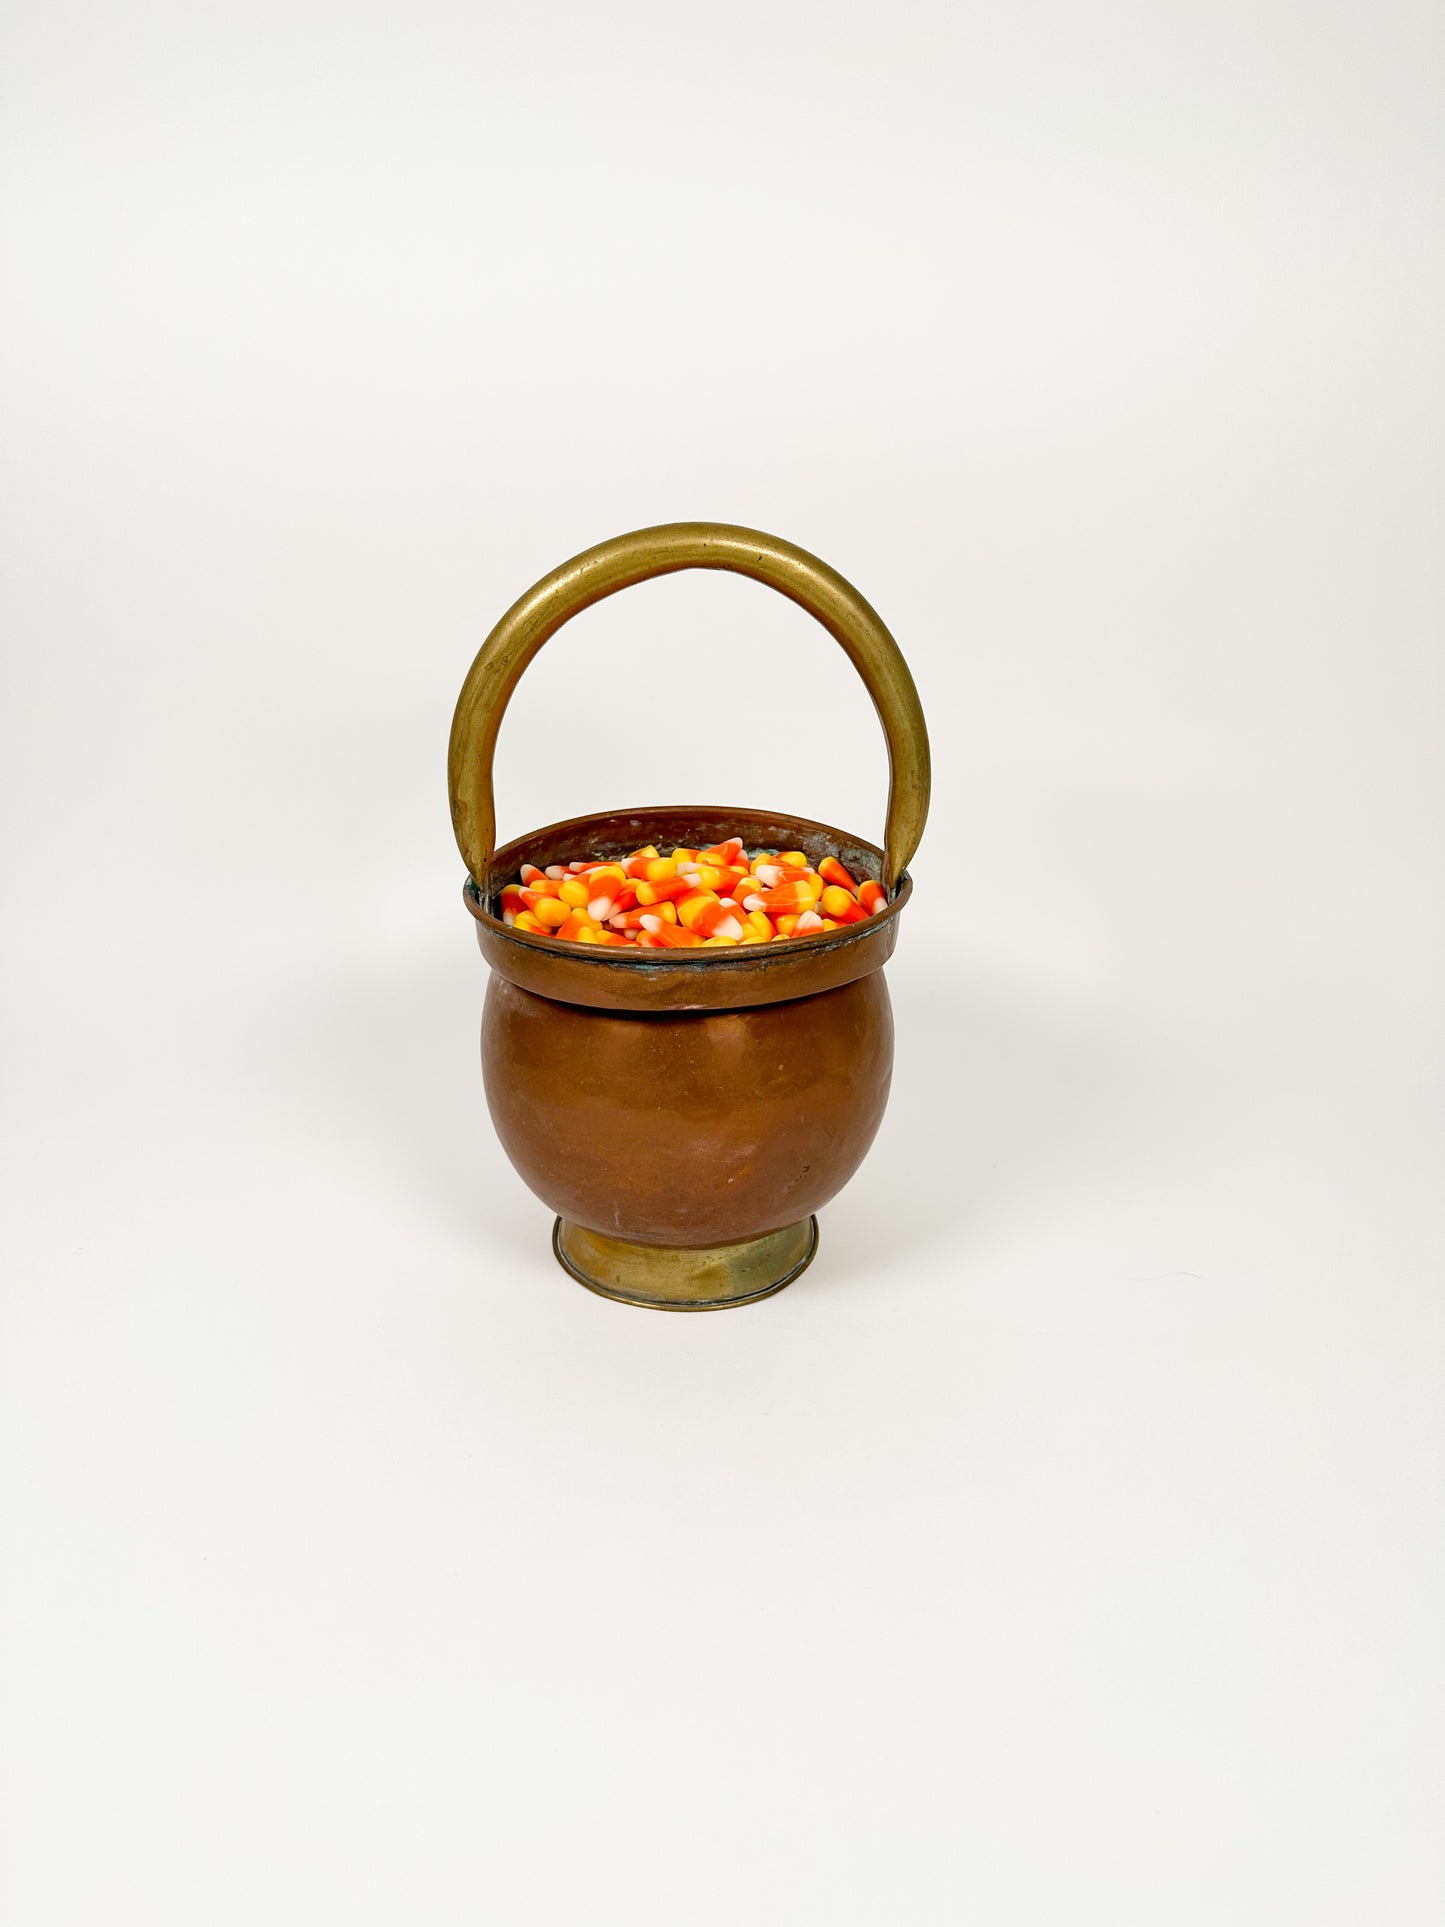 Petite Copper & Brass Handled Cauldron